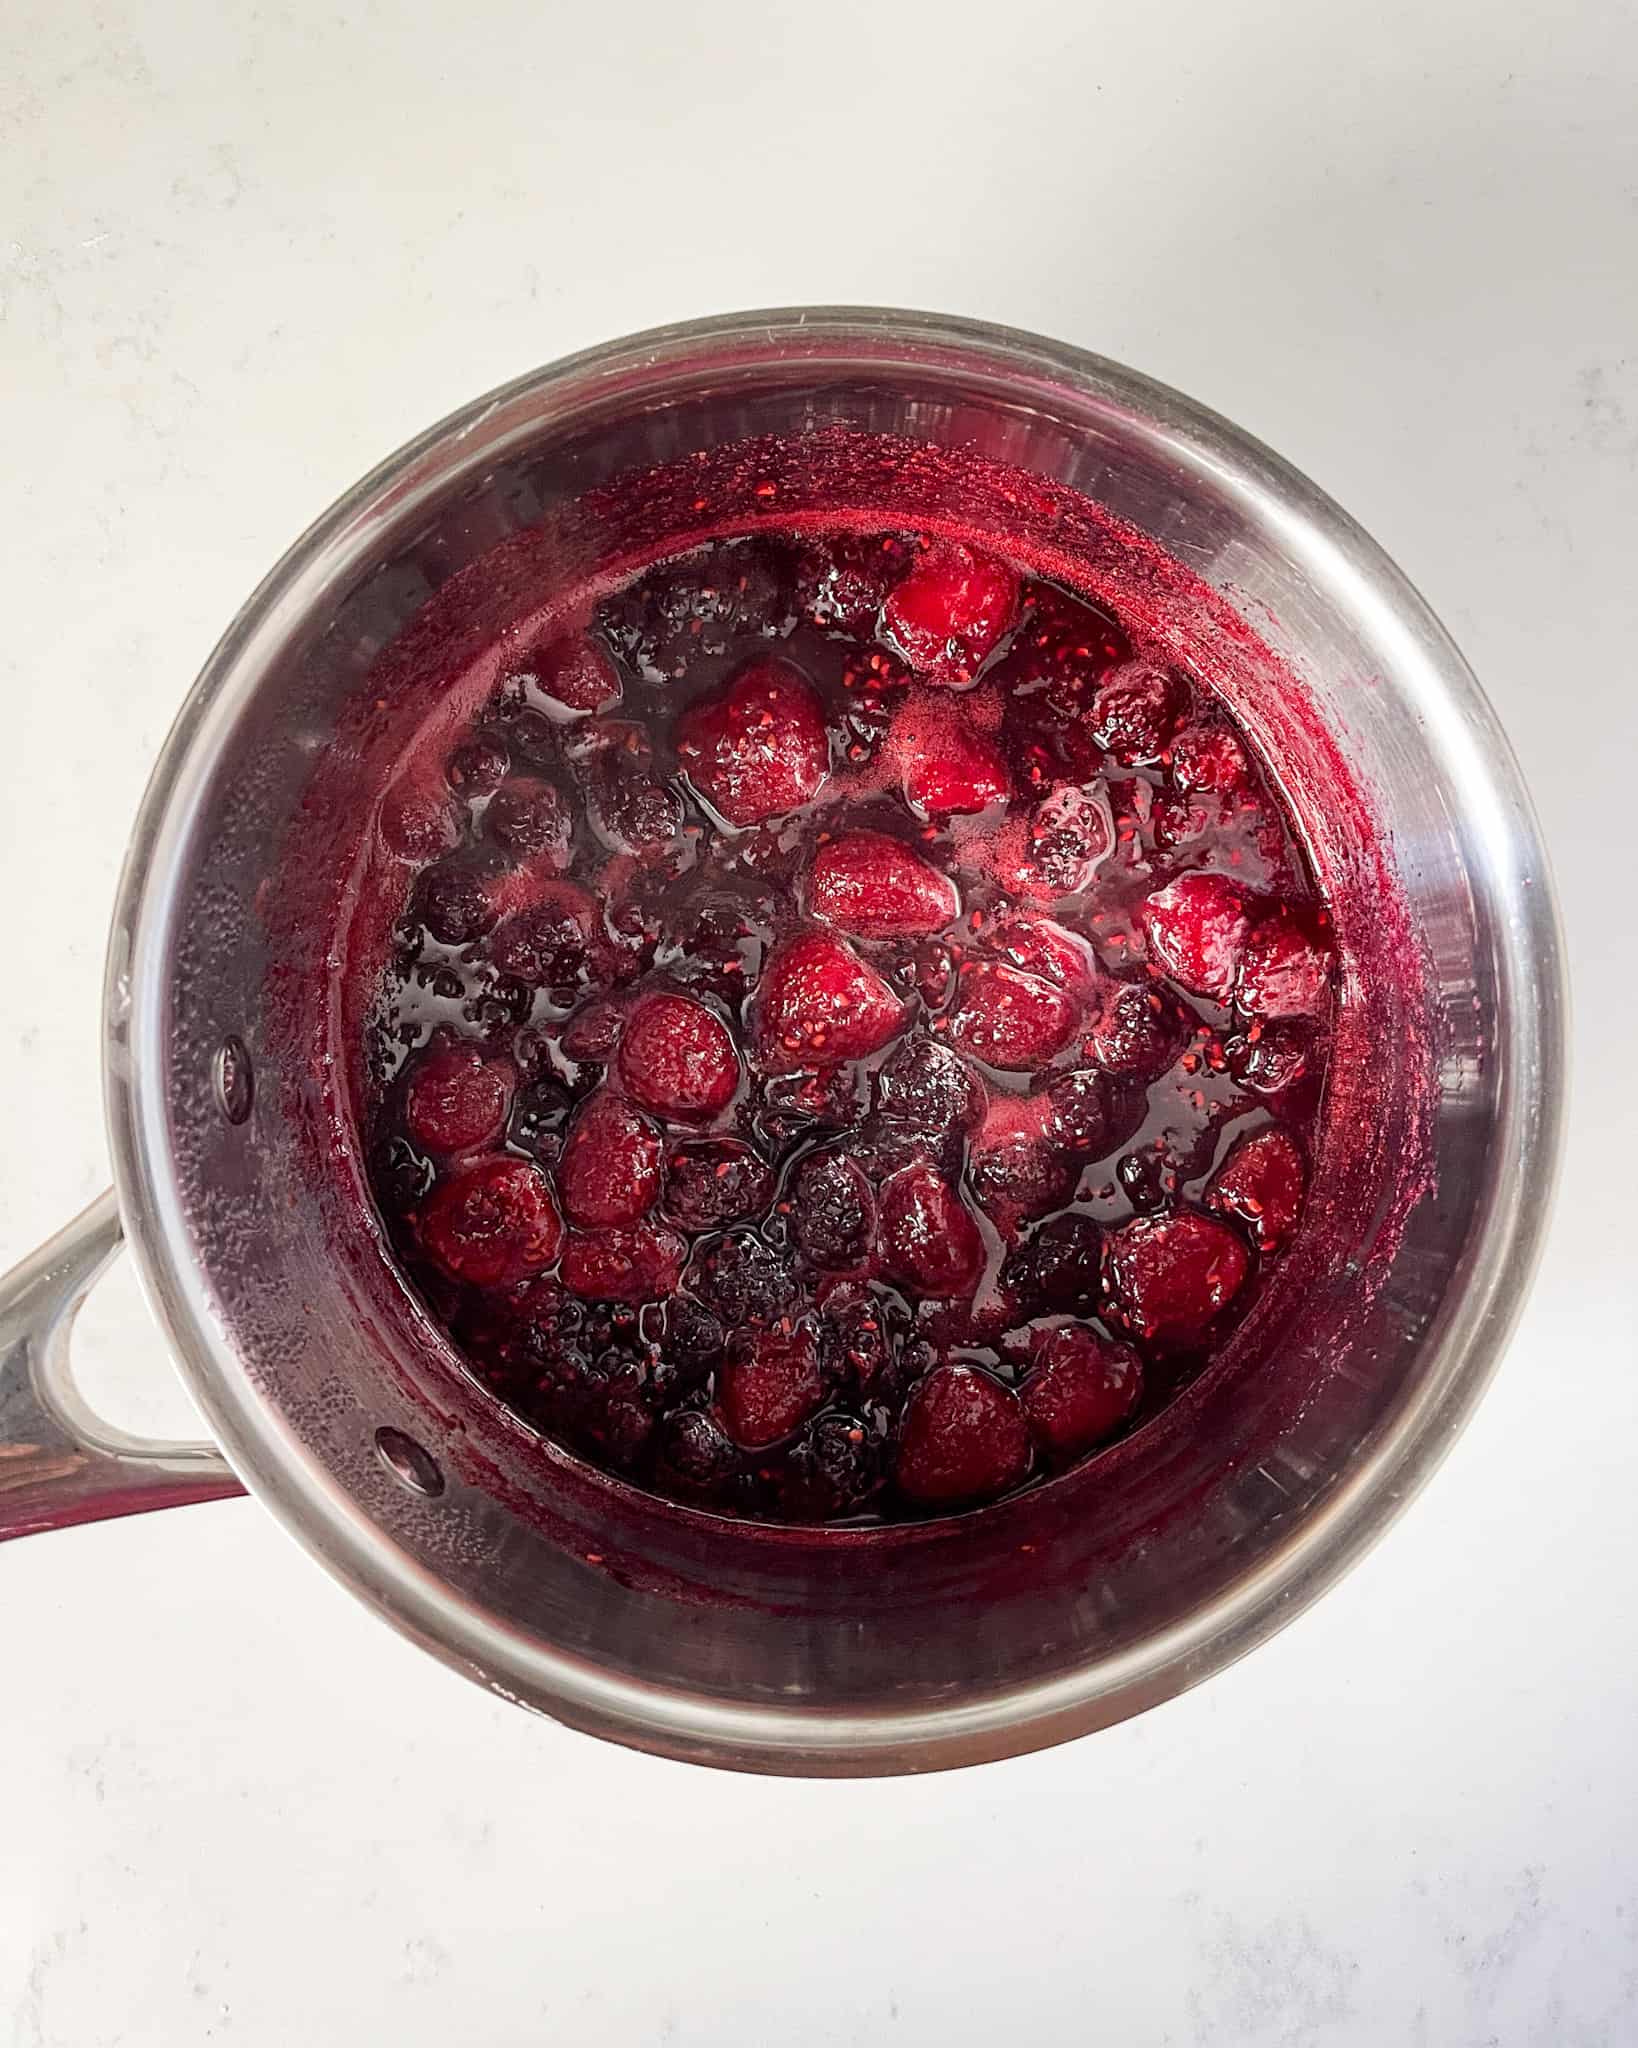 Mixed Berry Jam in a saucepan